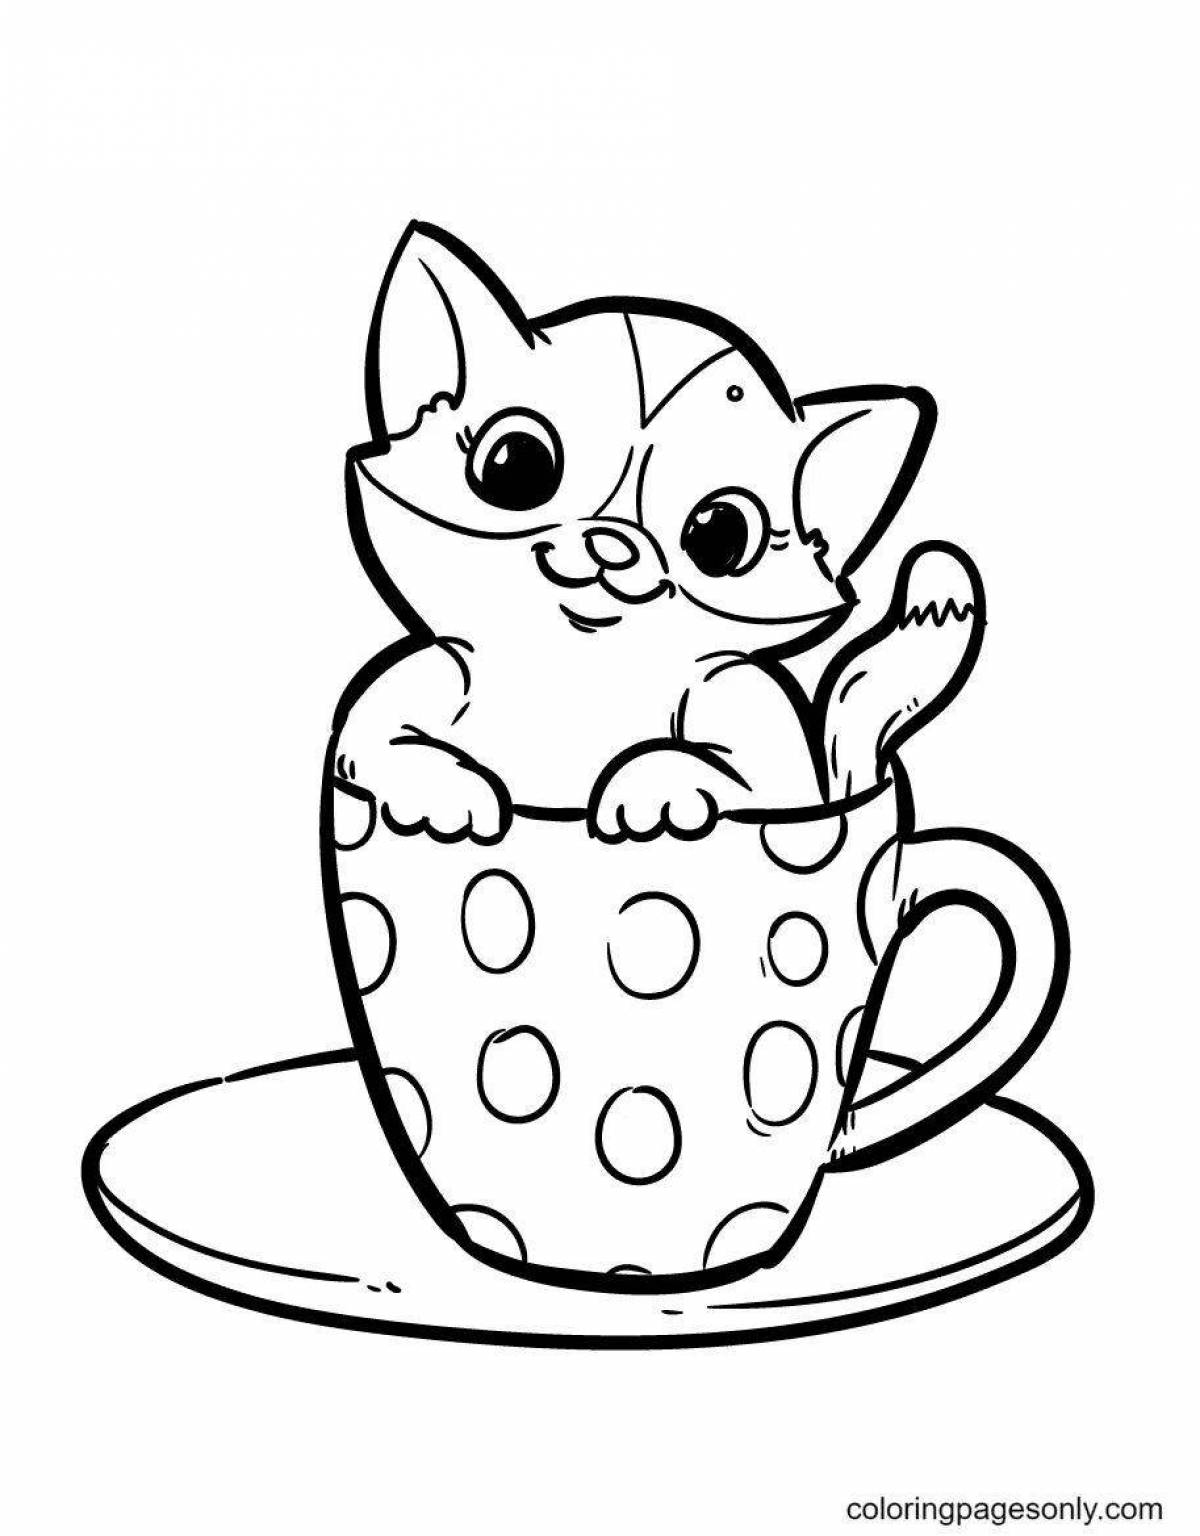 Coloring book cute kitten in a mug